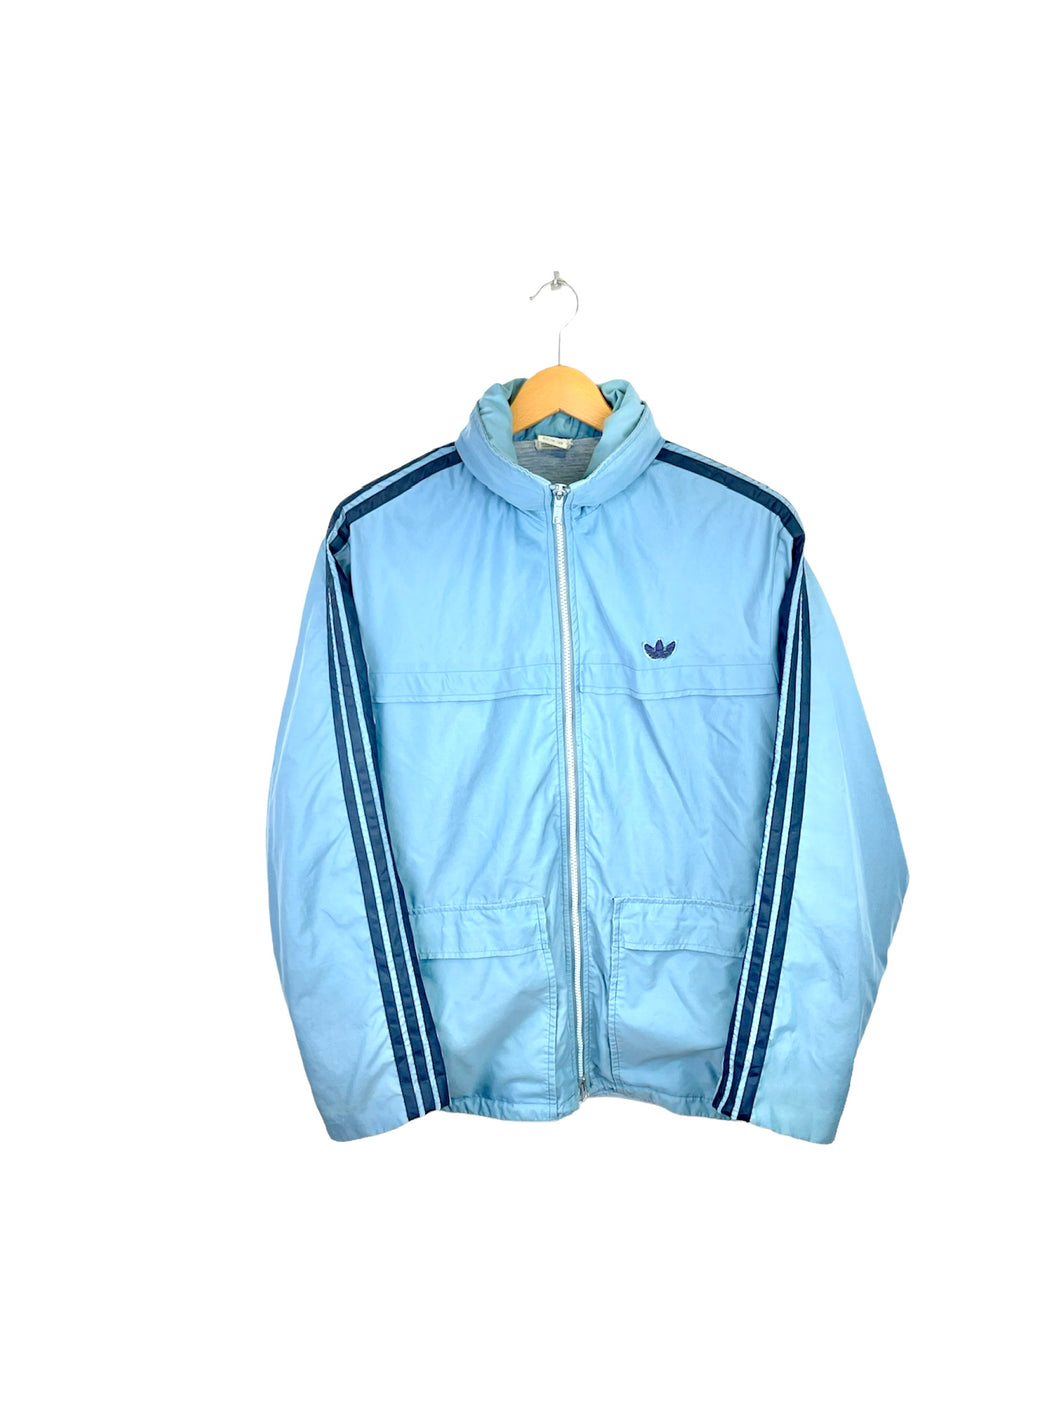 Adidas Descente 80s Jacket - Large